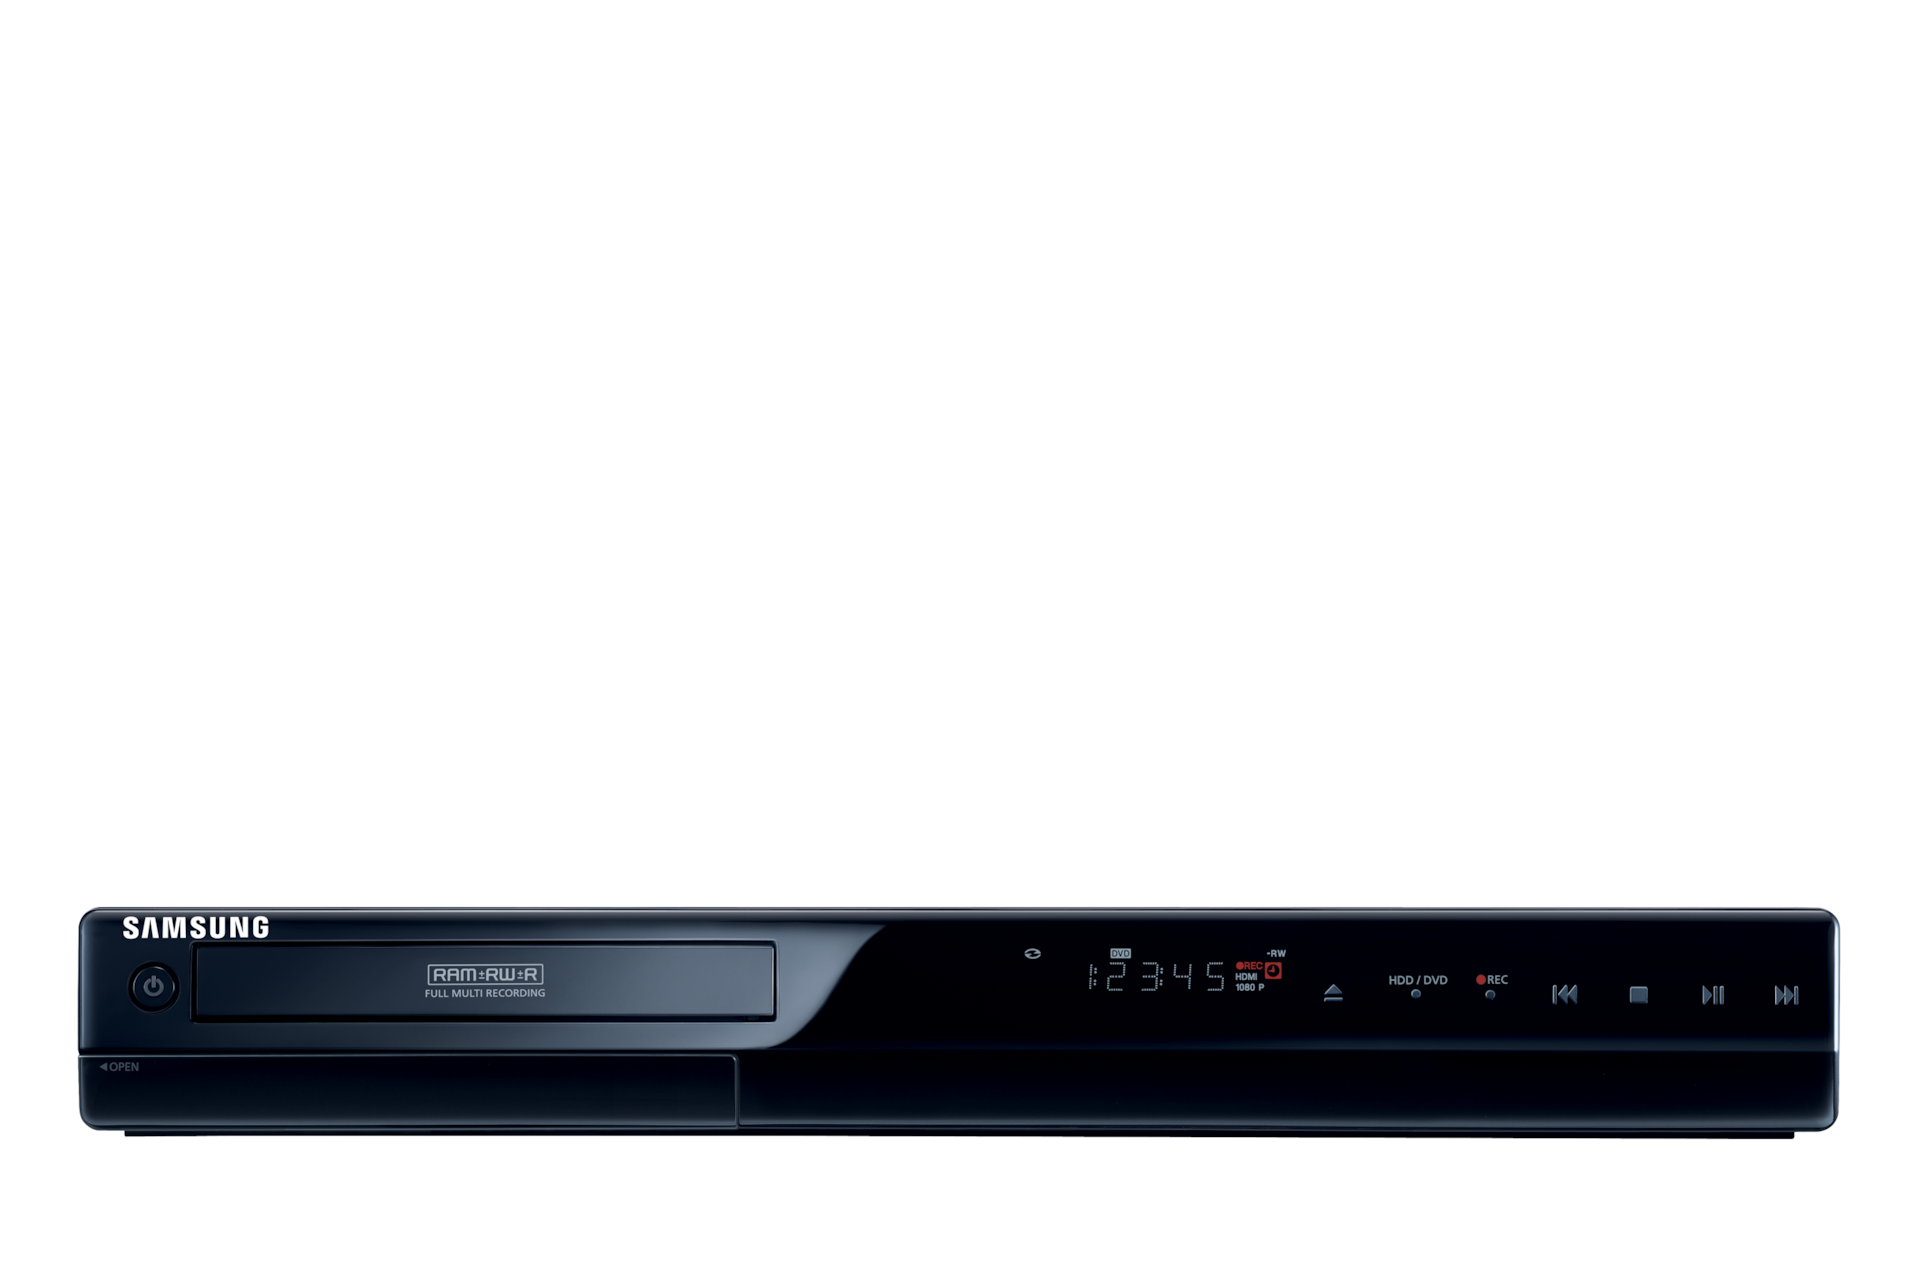 DVD HDD Recorder 250GB Hard Drive Samsung Support UK